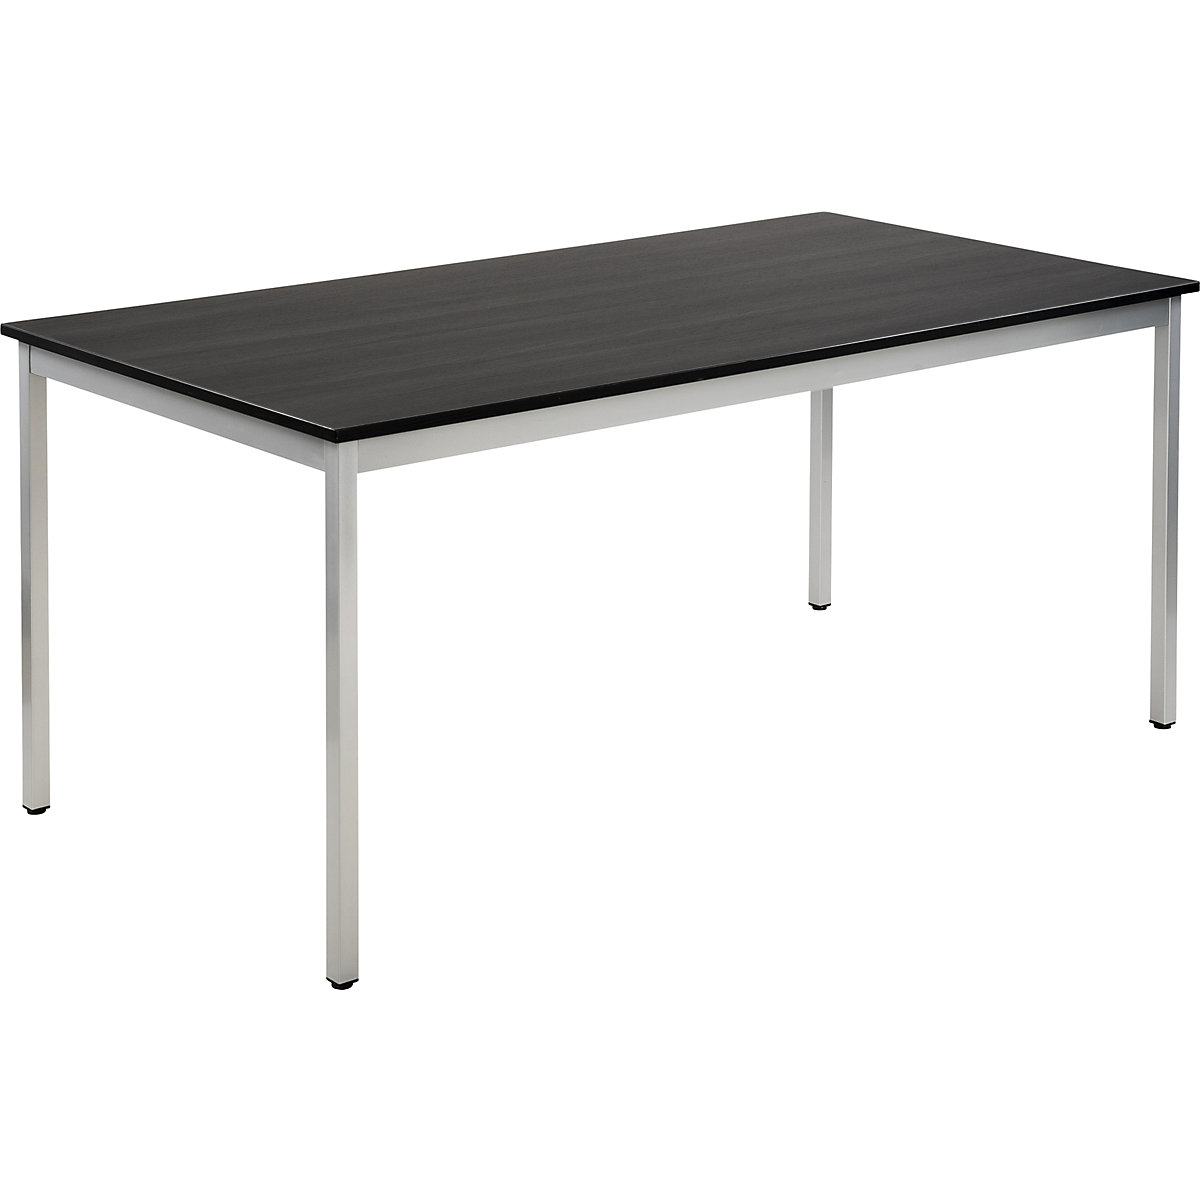 Višenamjenski stol – eurokraft basic, pravokutna izvedba, VxŠxD 740 x 1600 x 800 mm, ploča u imitaciji jasena u tamnosivoj boji, postolje u aluminij bijeloj boji-14